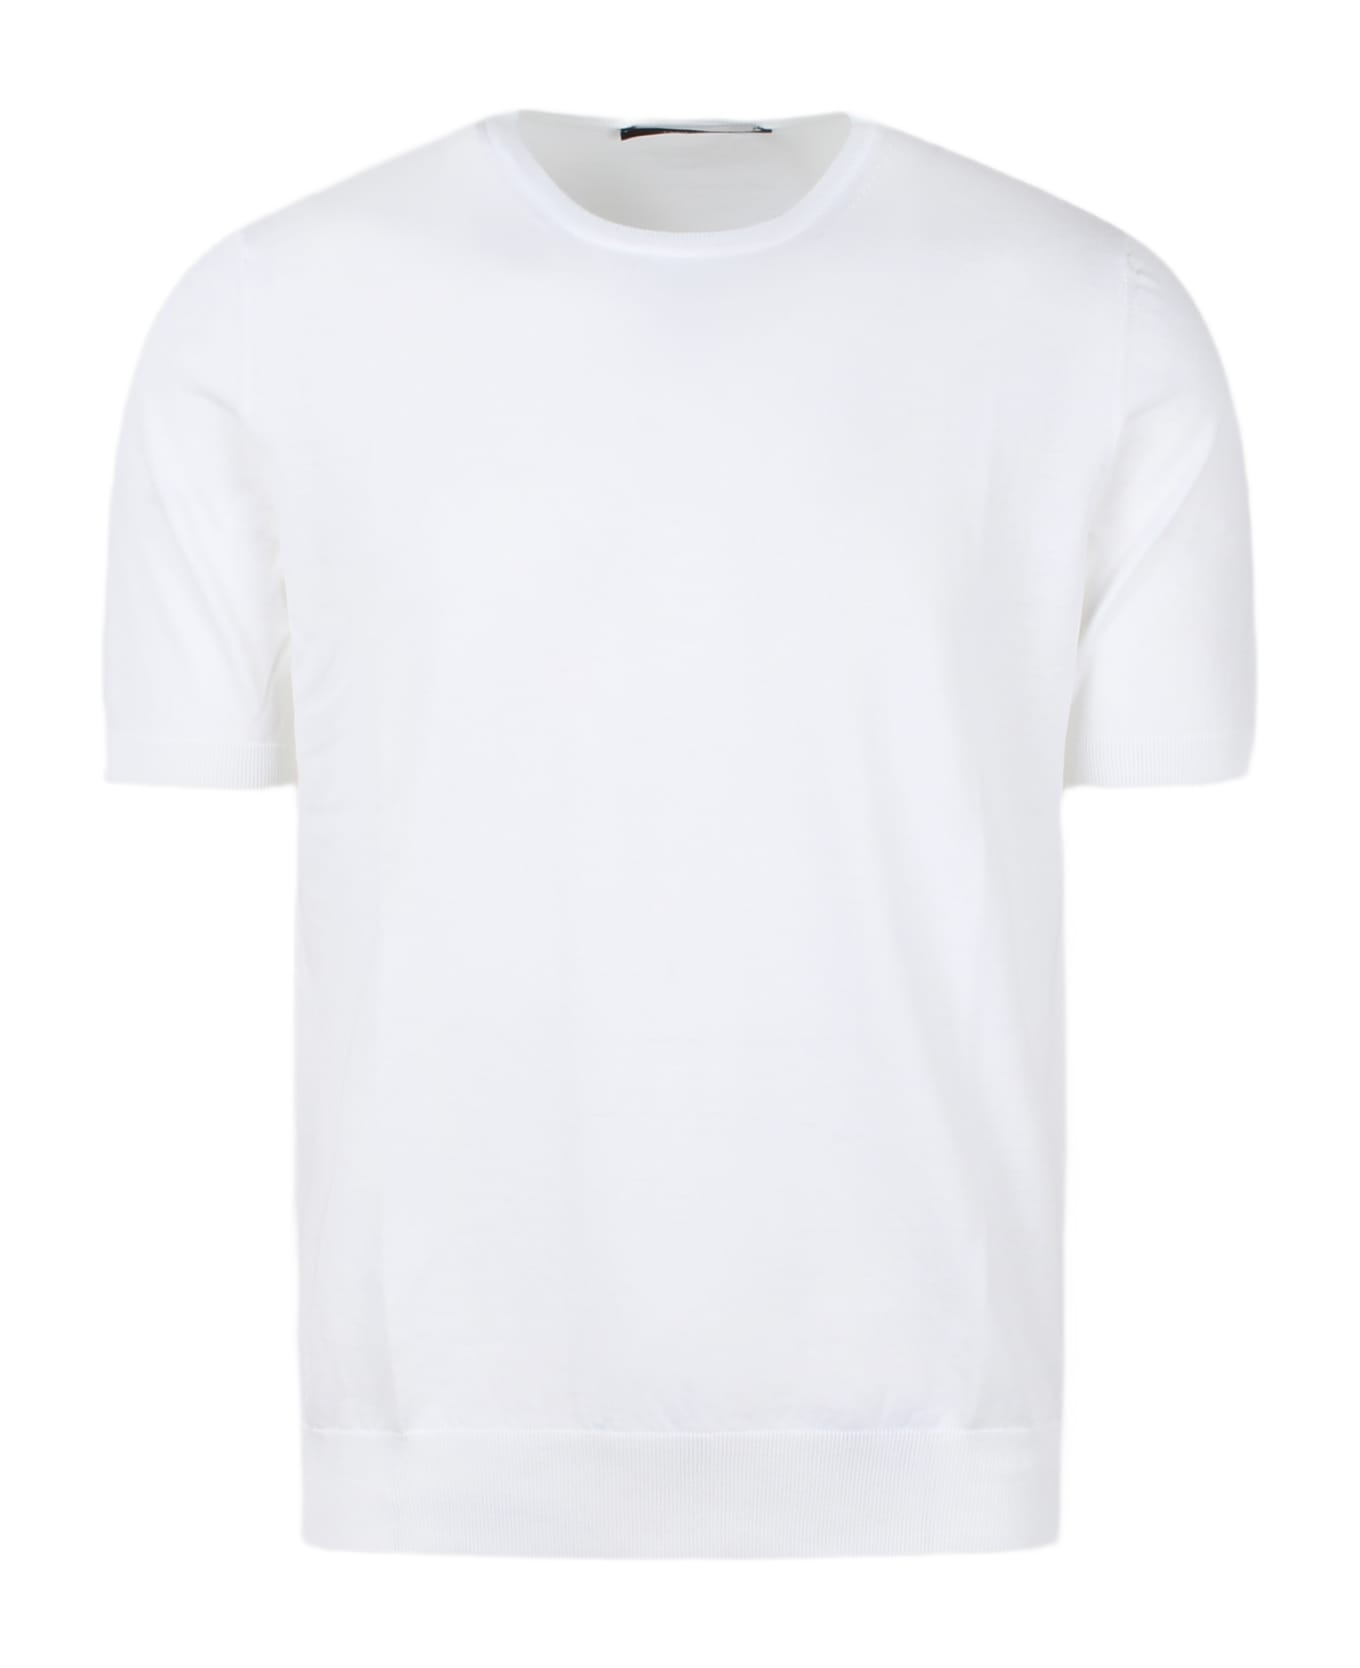 Tagliatore Cotton Knit T-shirt - White